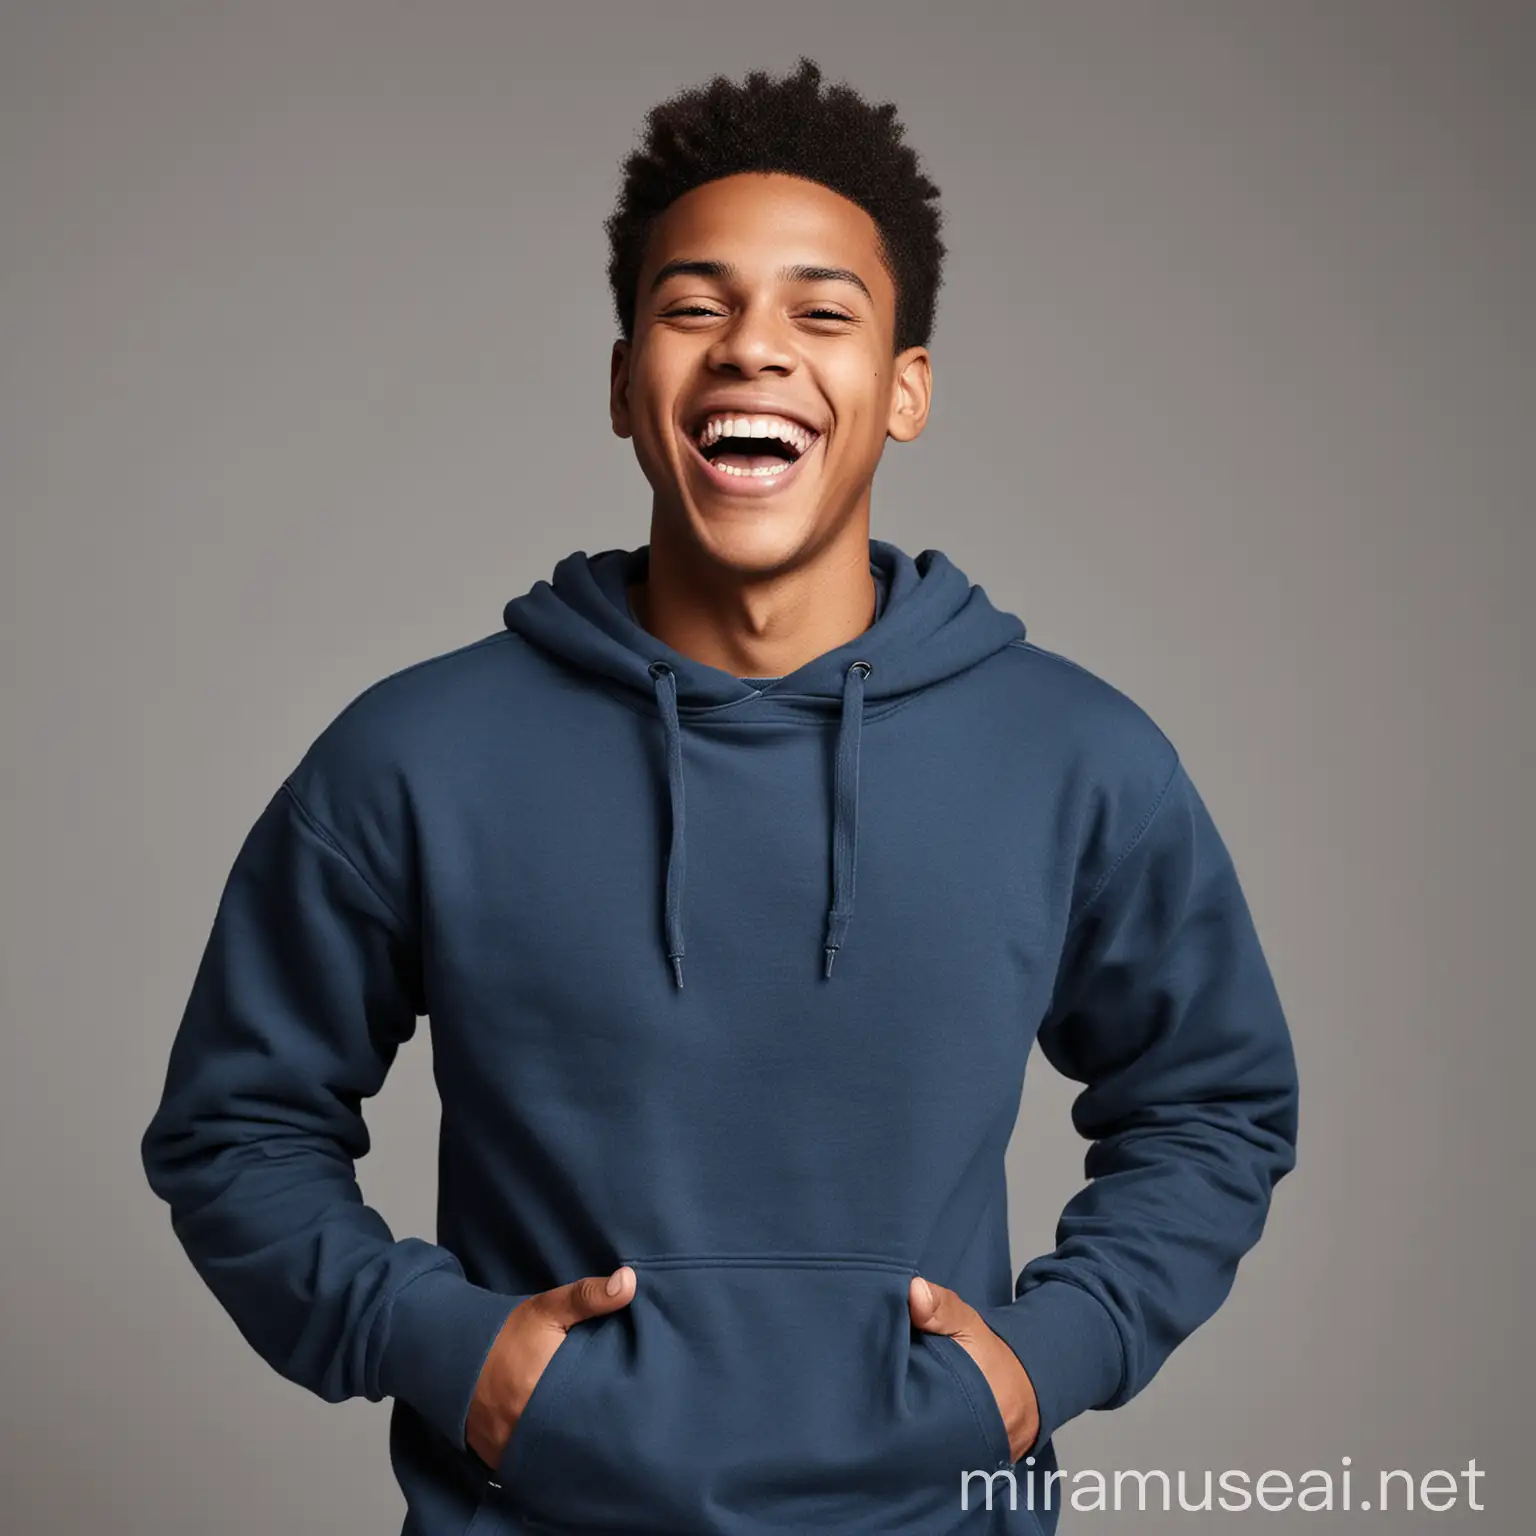 Joyful African American Man in Blue Sweatshirt Smiling at Camera